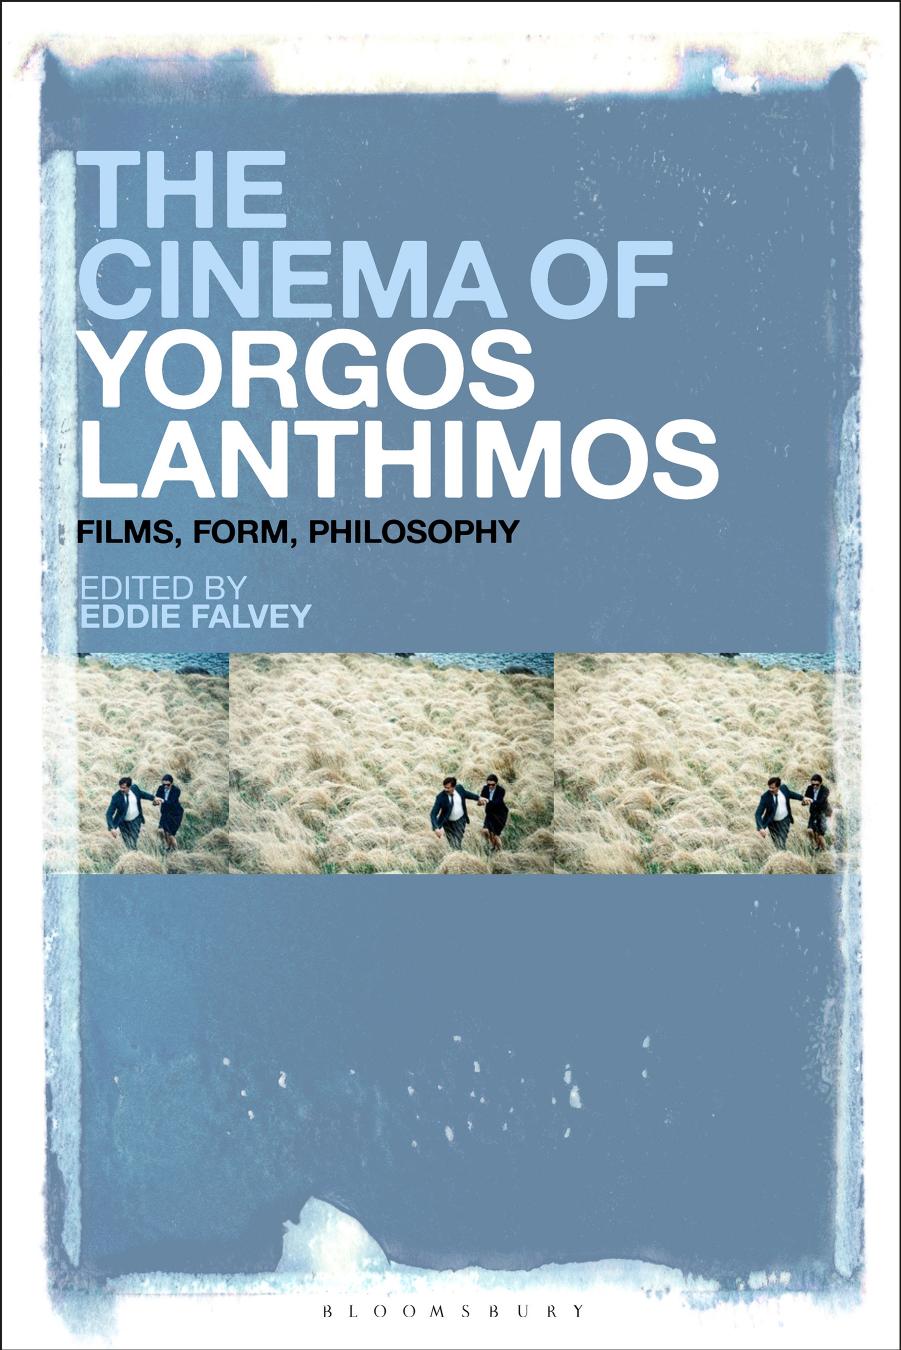 The Cinema of Yorgos Lanthimos: Films, Form, Philosophy by Eddie Falvey (editor)